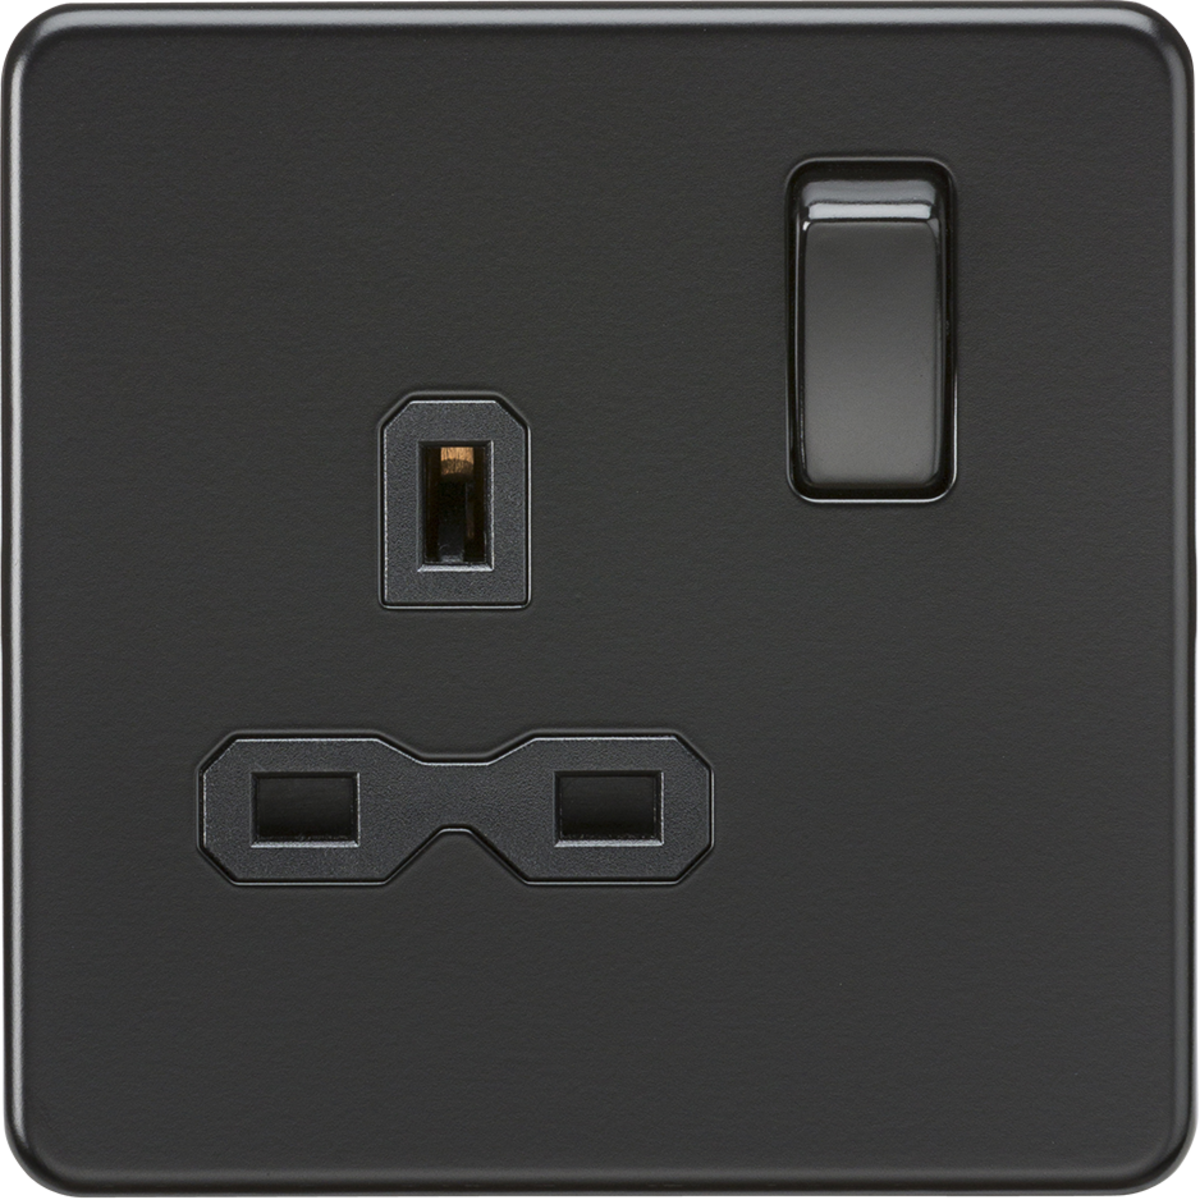 Screwless 13A 1G DP switched socket - Matt black with black insert